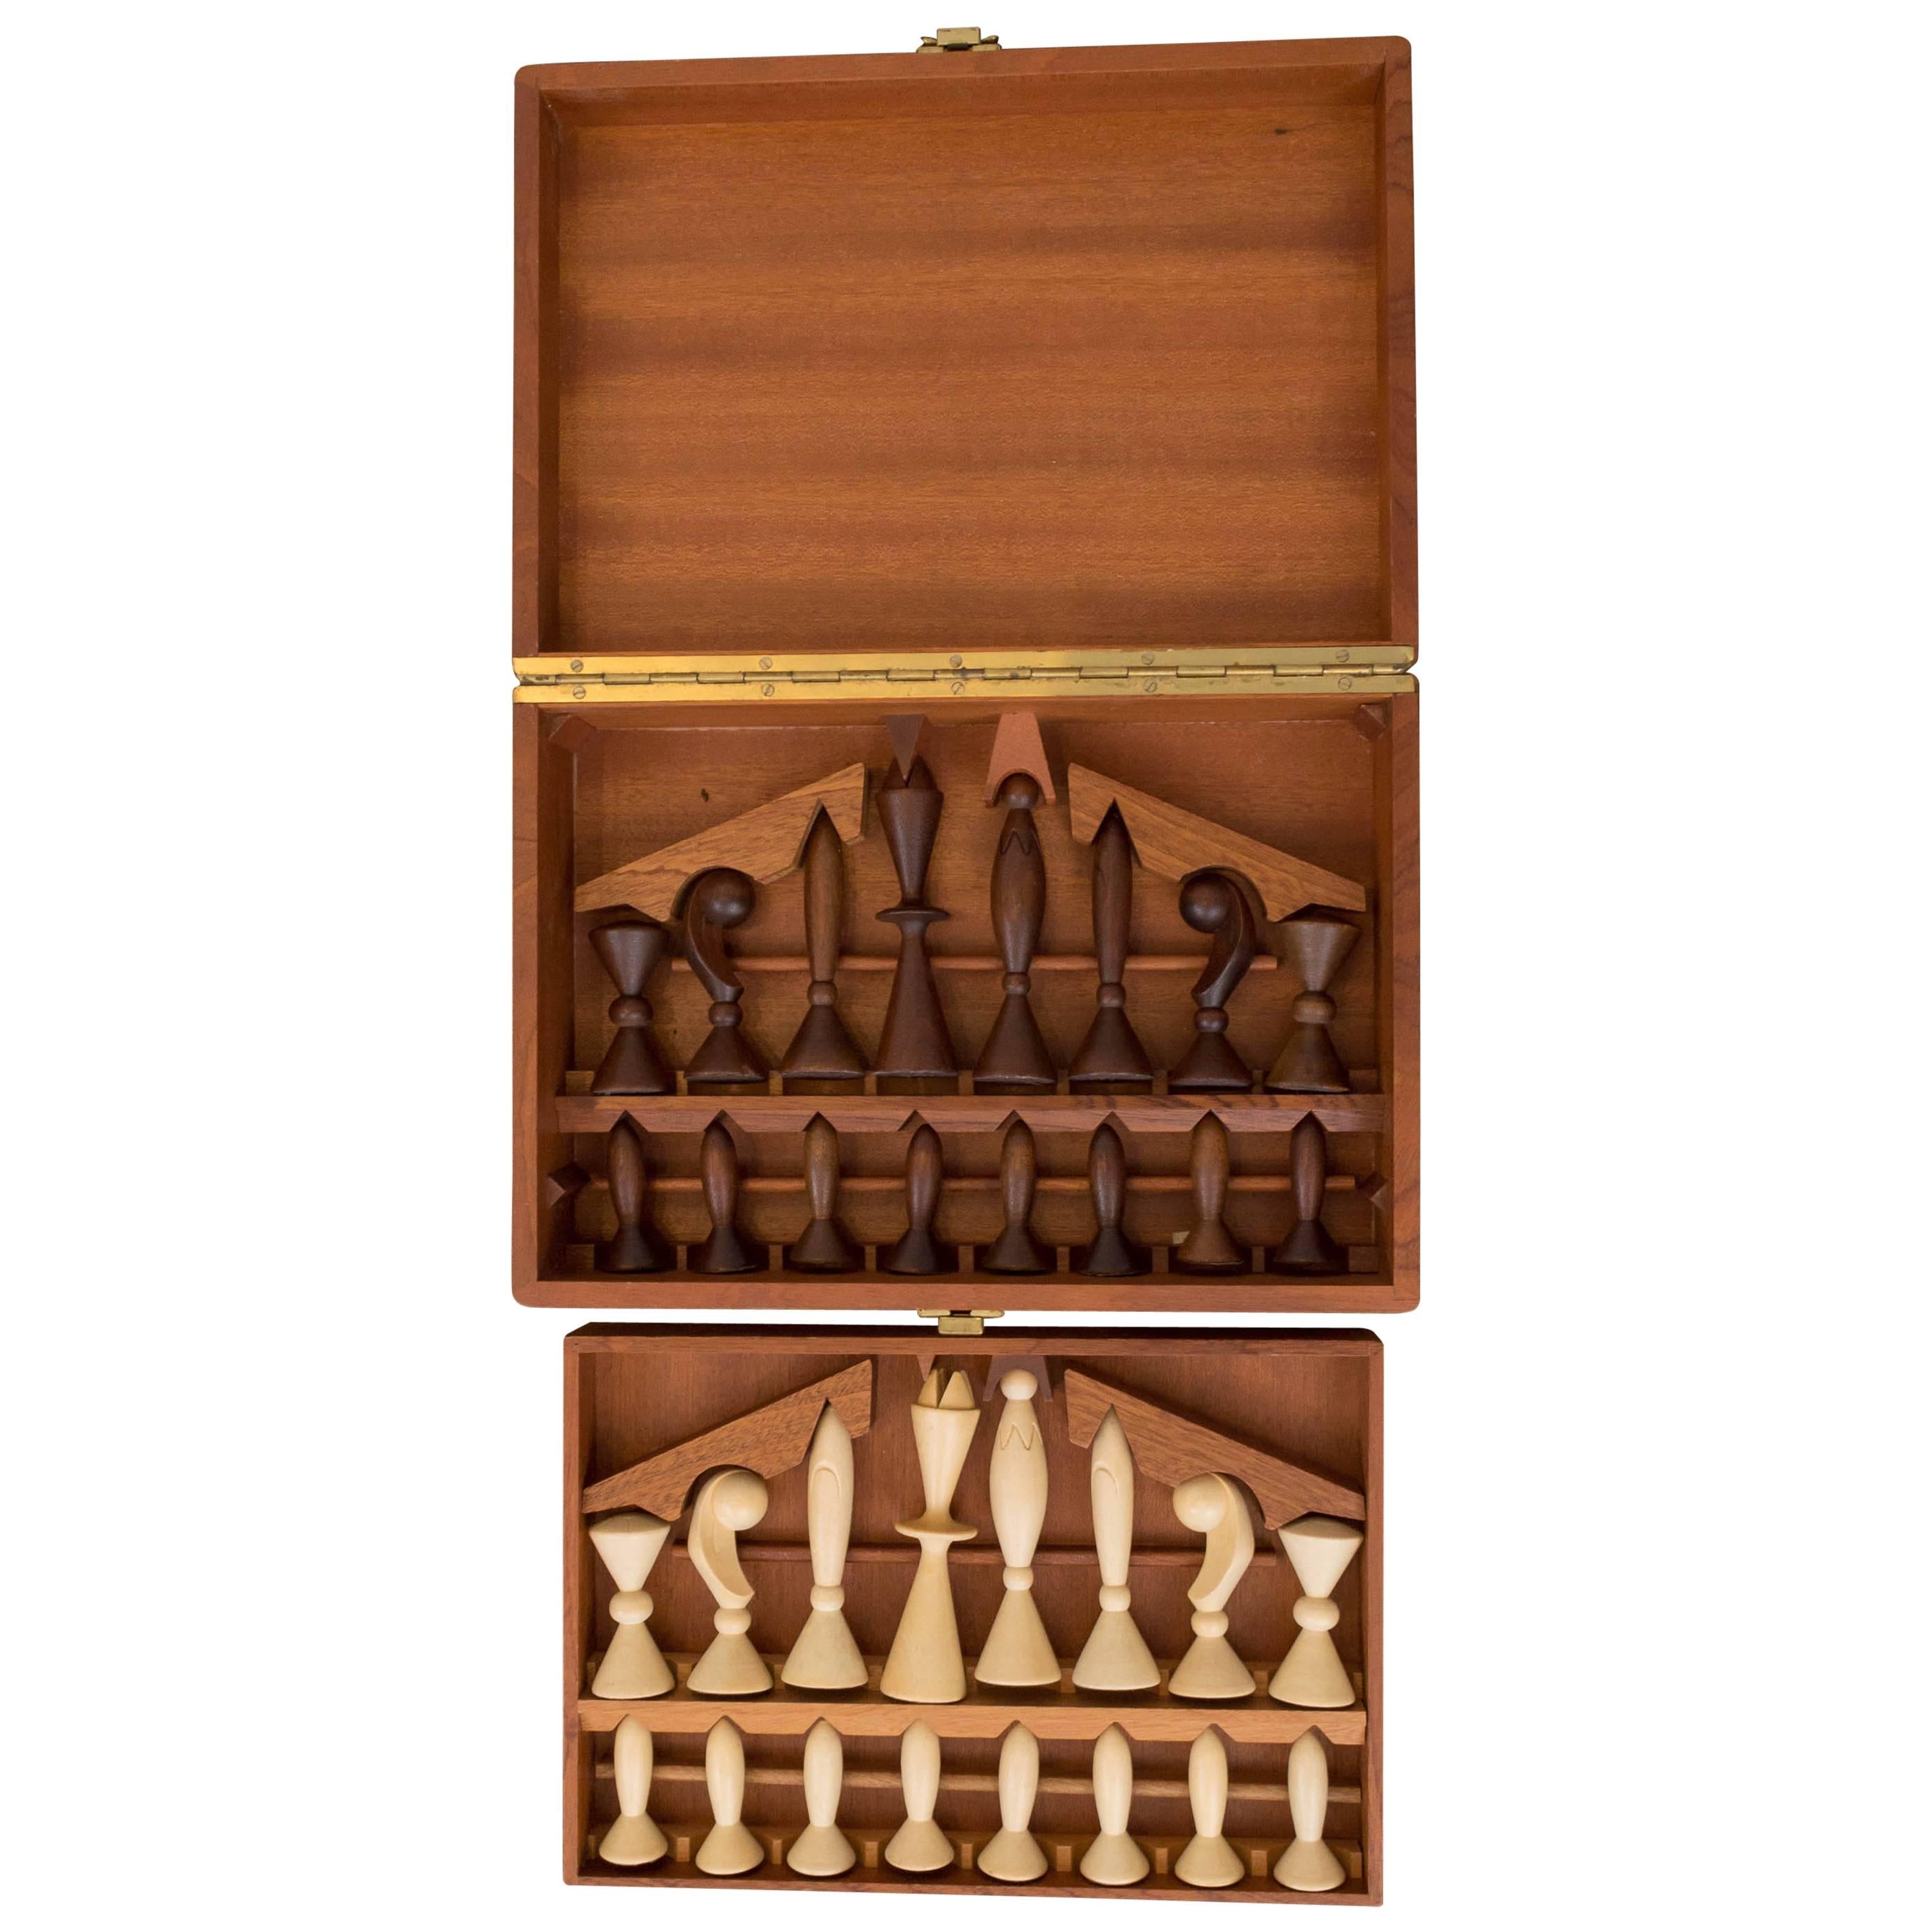 ANRI Italian "Space Age" Wood Chess Set